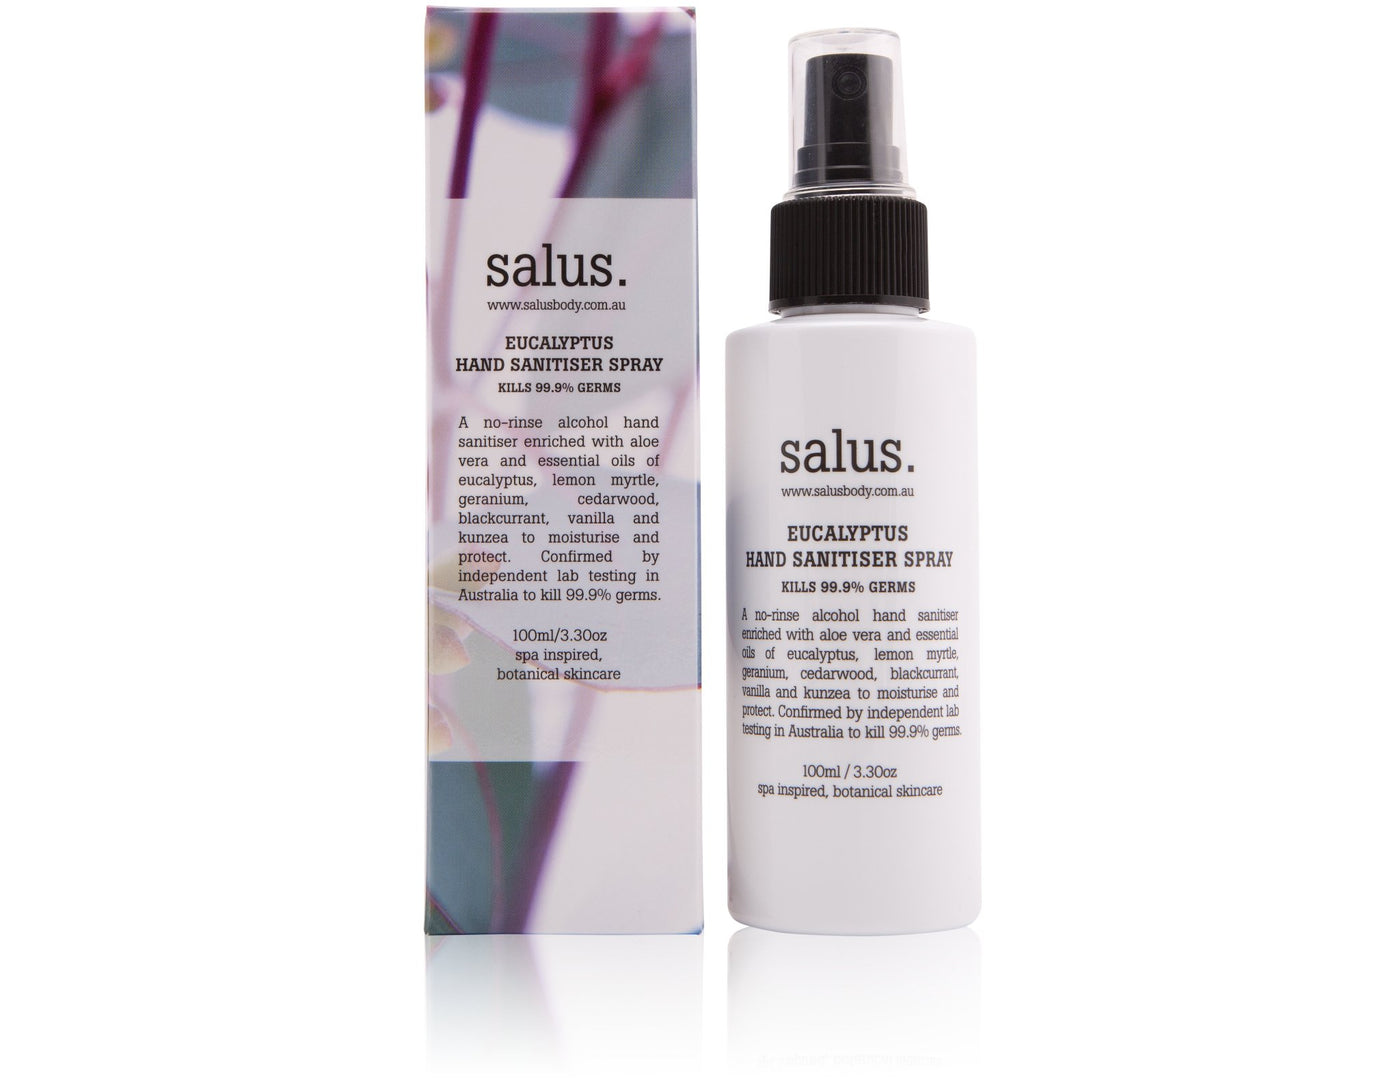 Salus Hand Sanitiser Spray / Eucalyptus